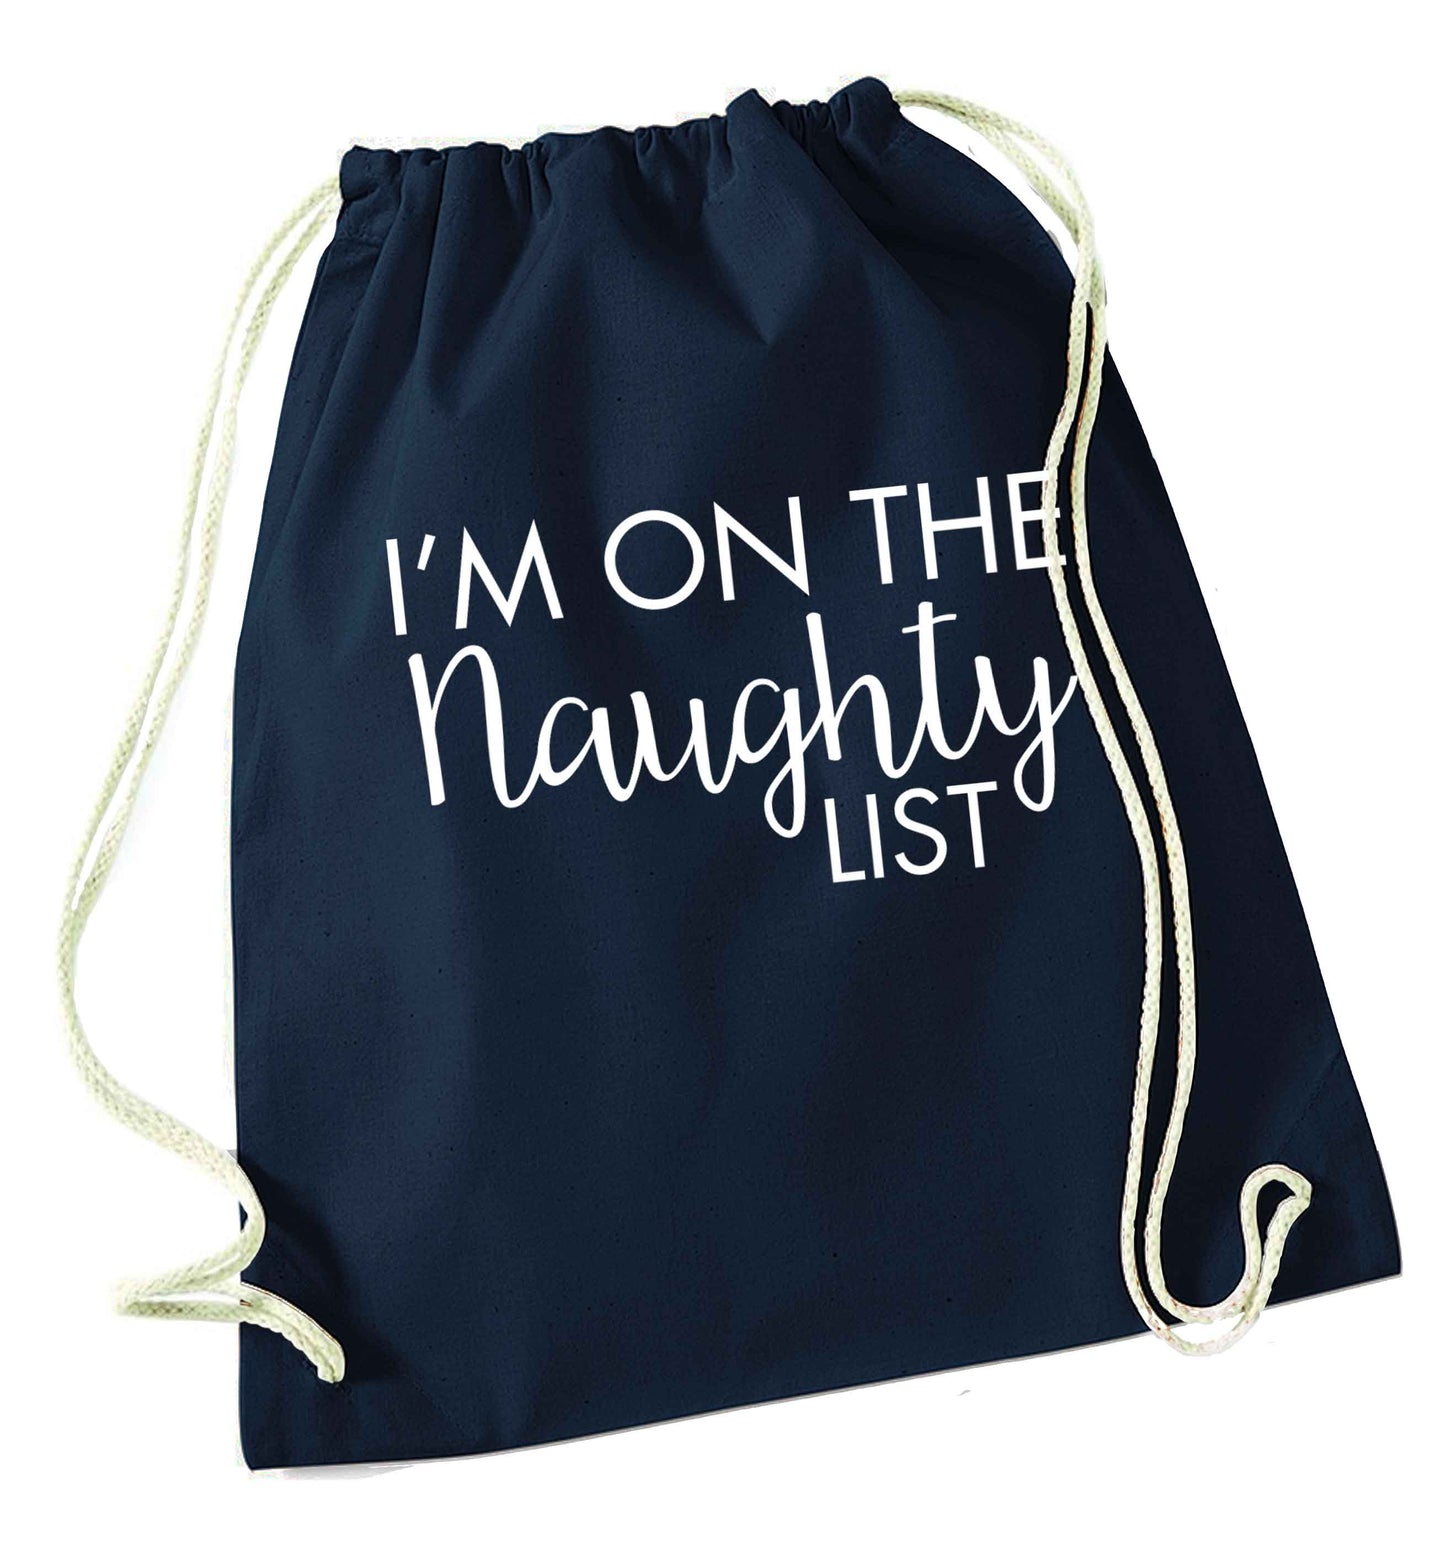 I'm on the naughty list navy drawstring bag